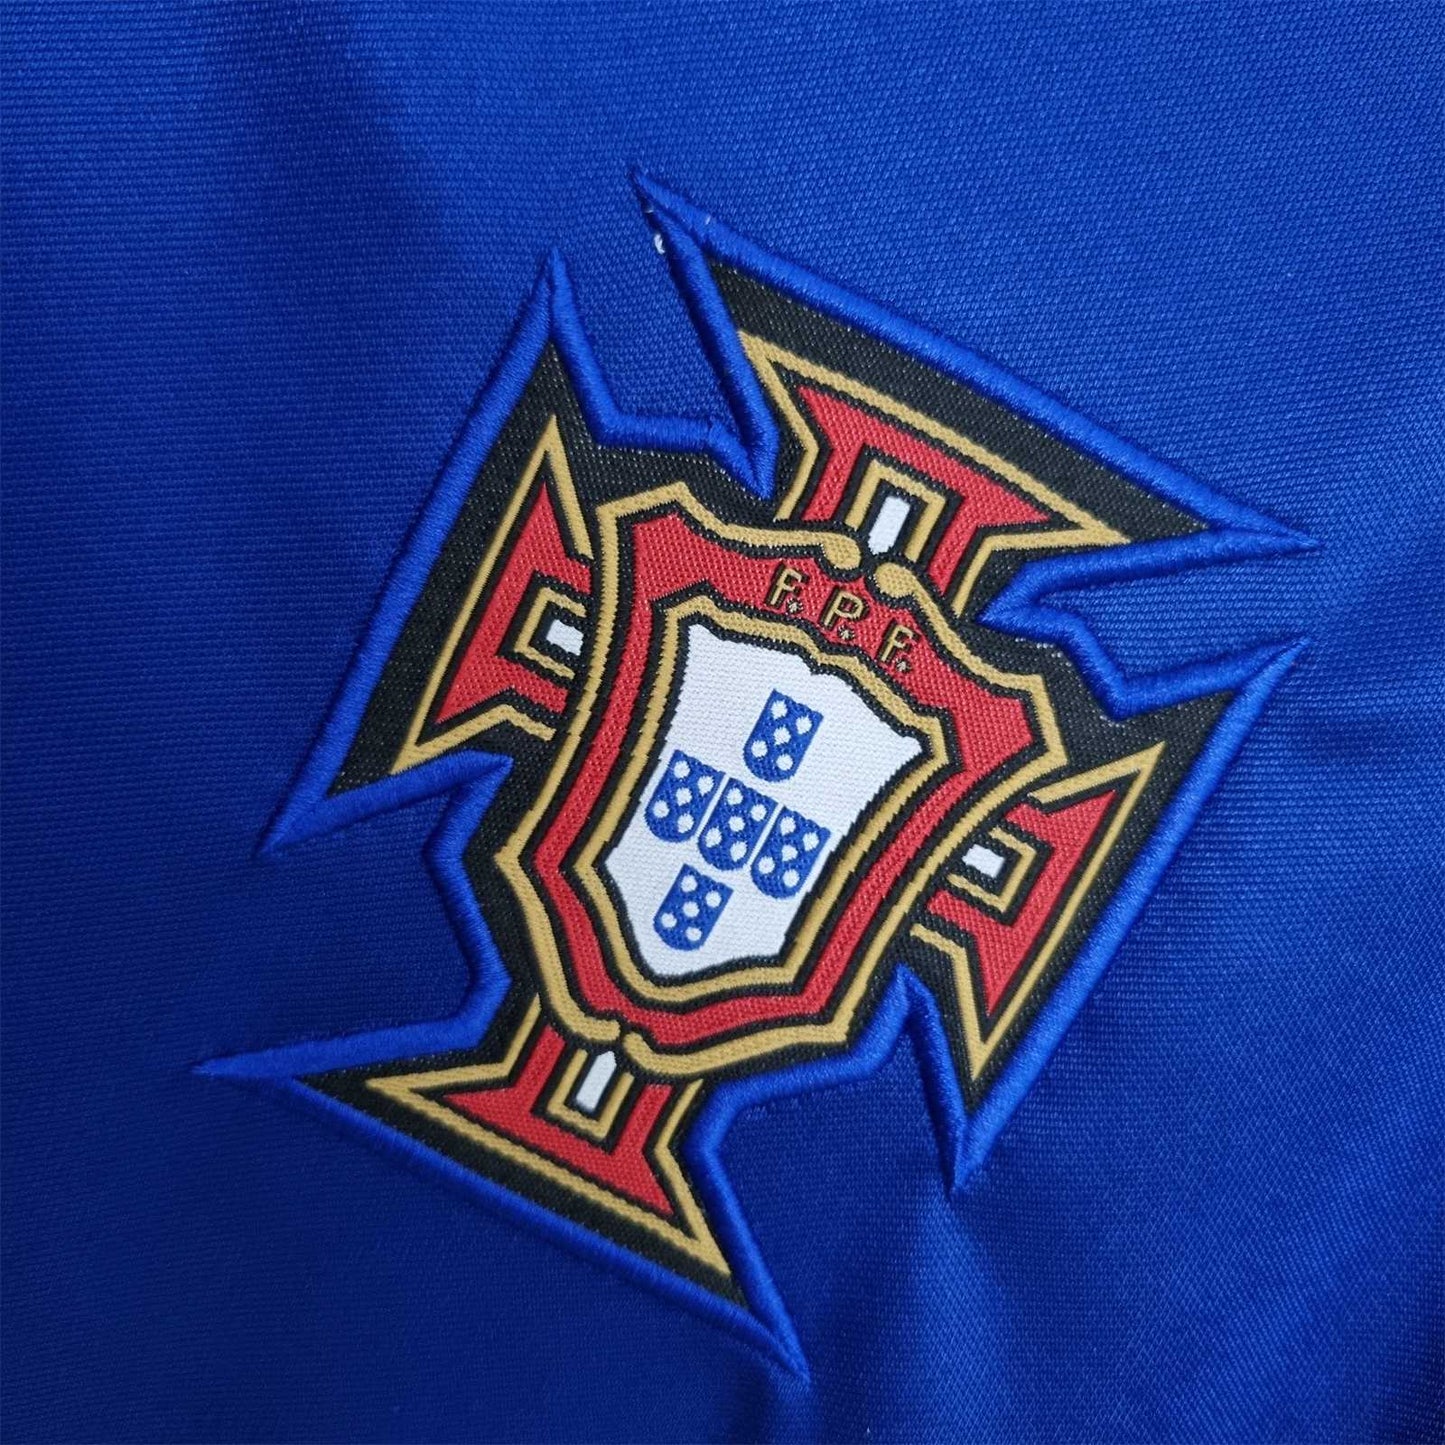 Portugal 1997 Away Shirt